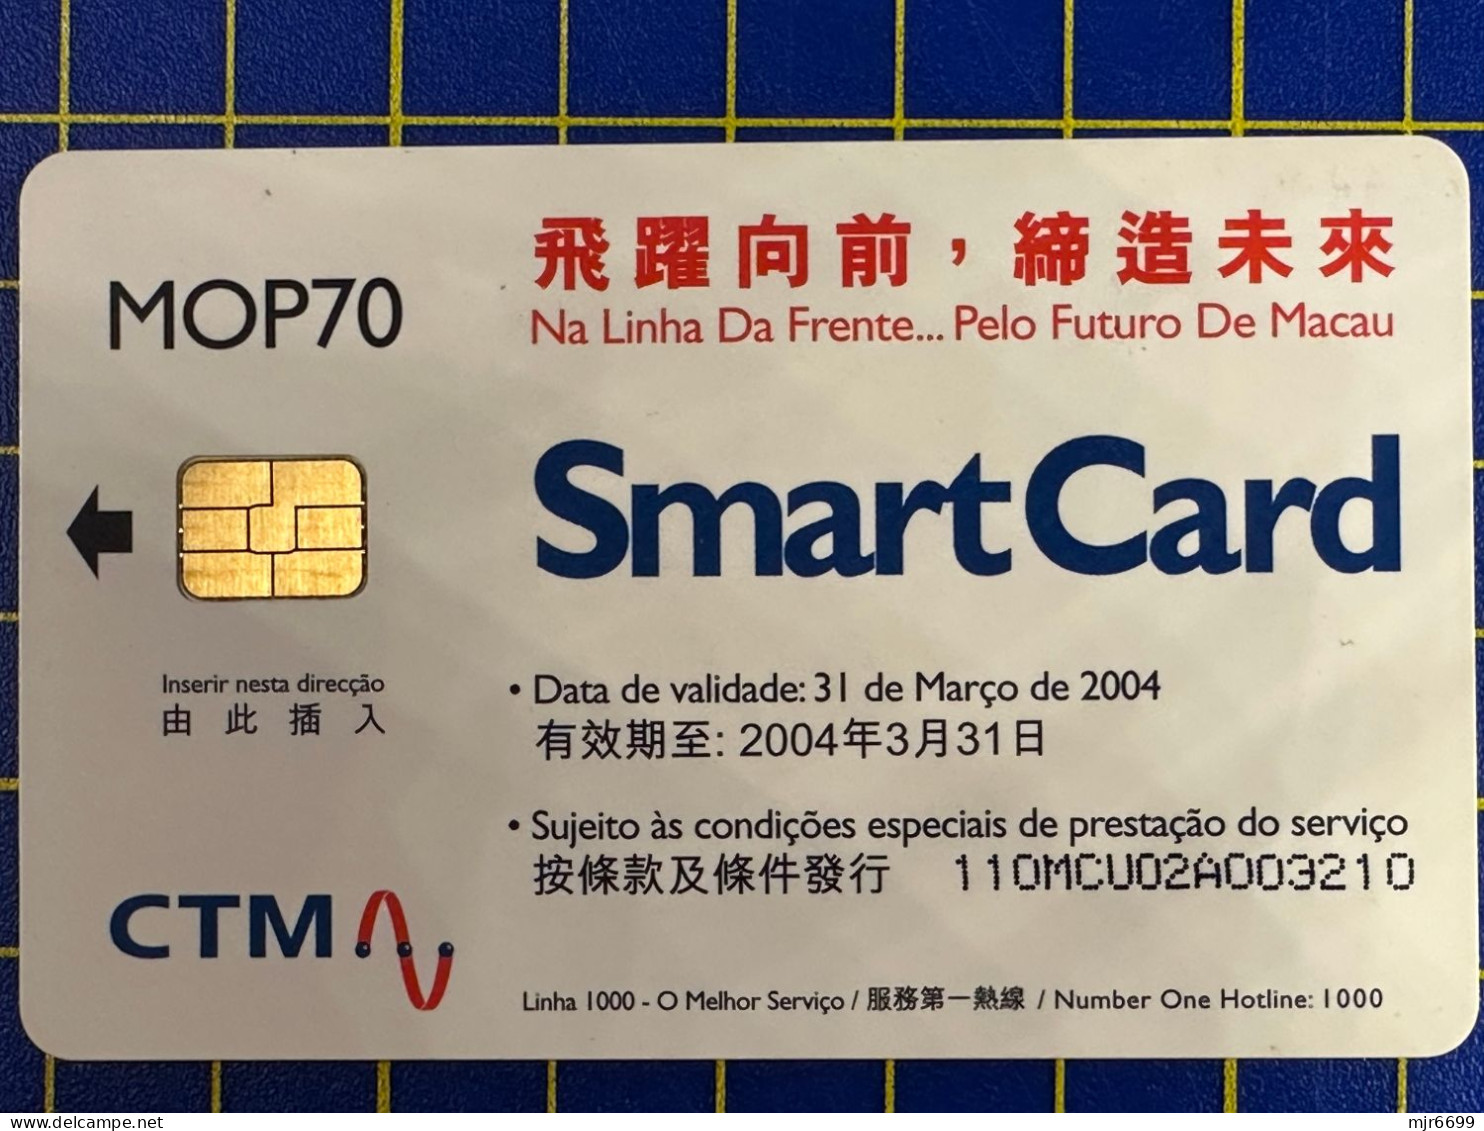 MACAU "SMART CARD" #110 MCU PHONE CARD VERY FINE AND CLEAN USED, VALID DATE / 31 MARCH 2004 - Macao